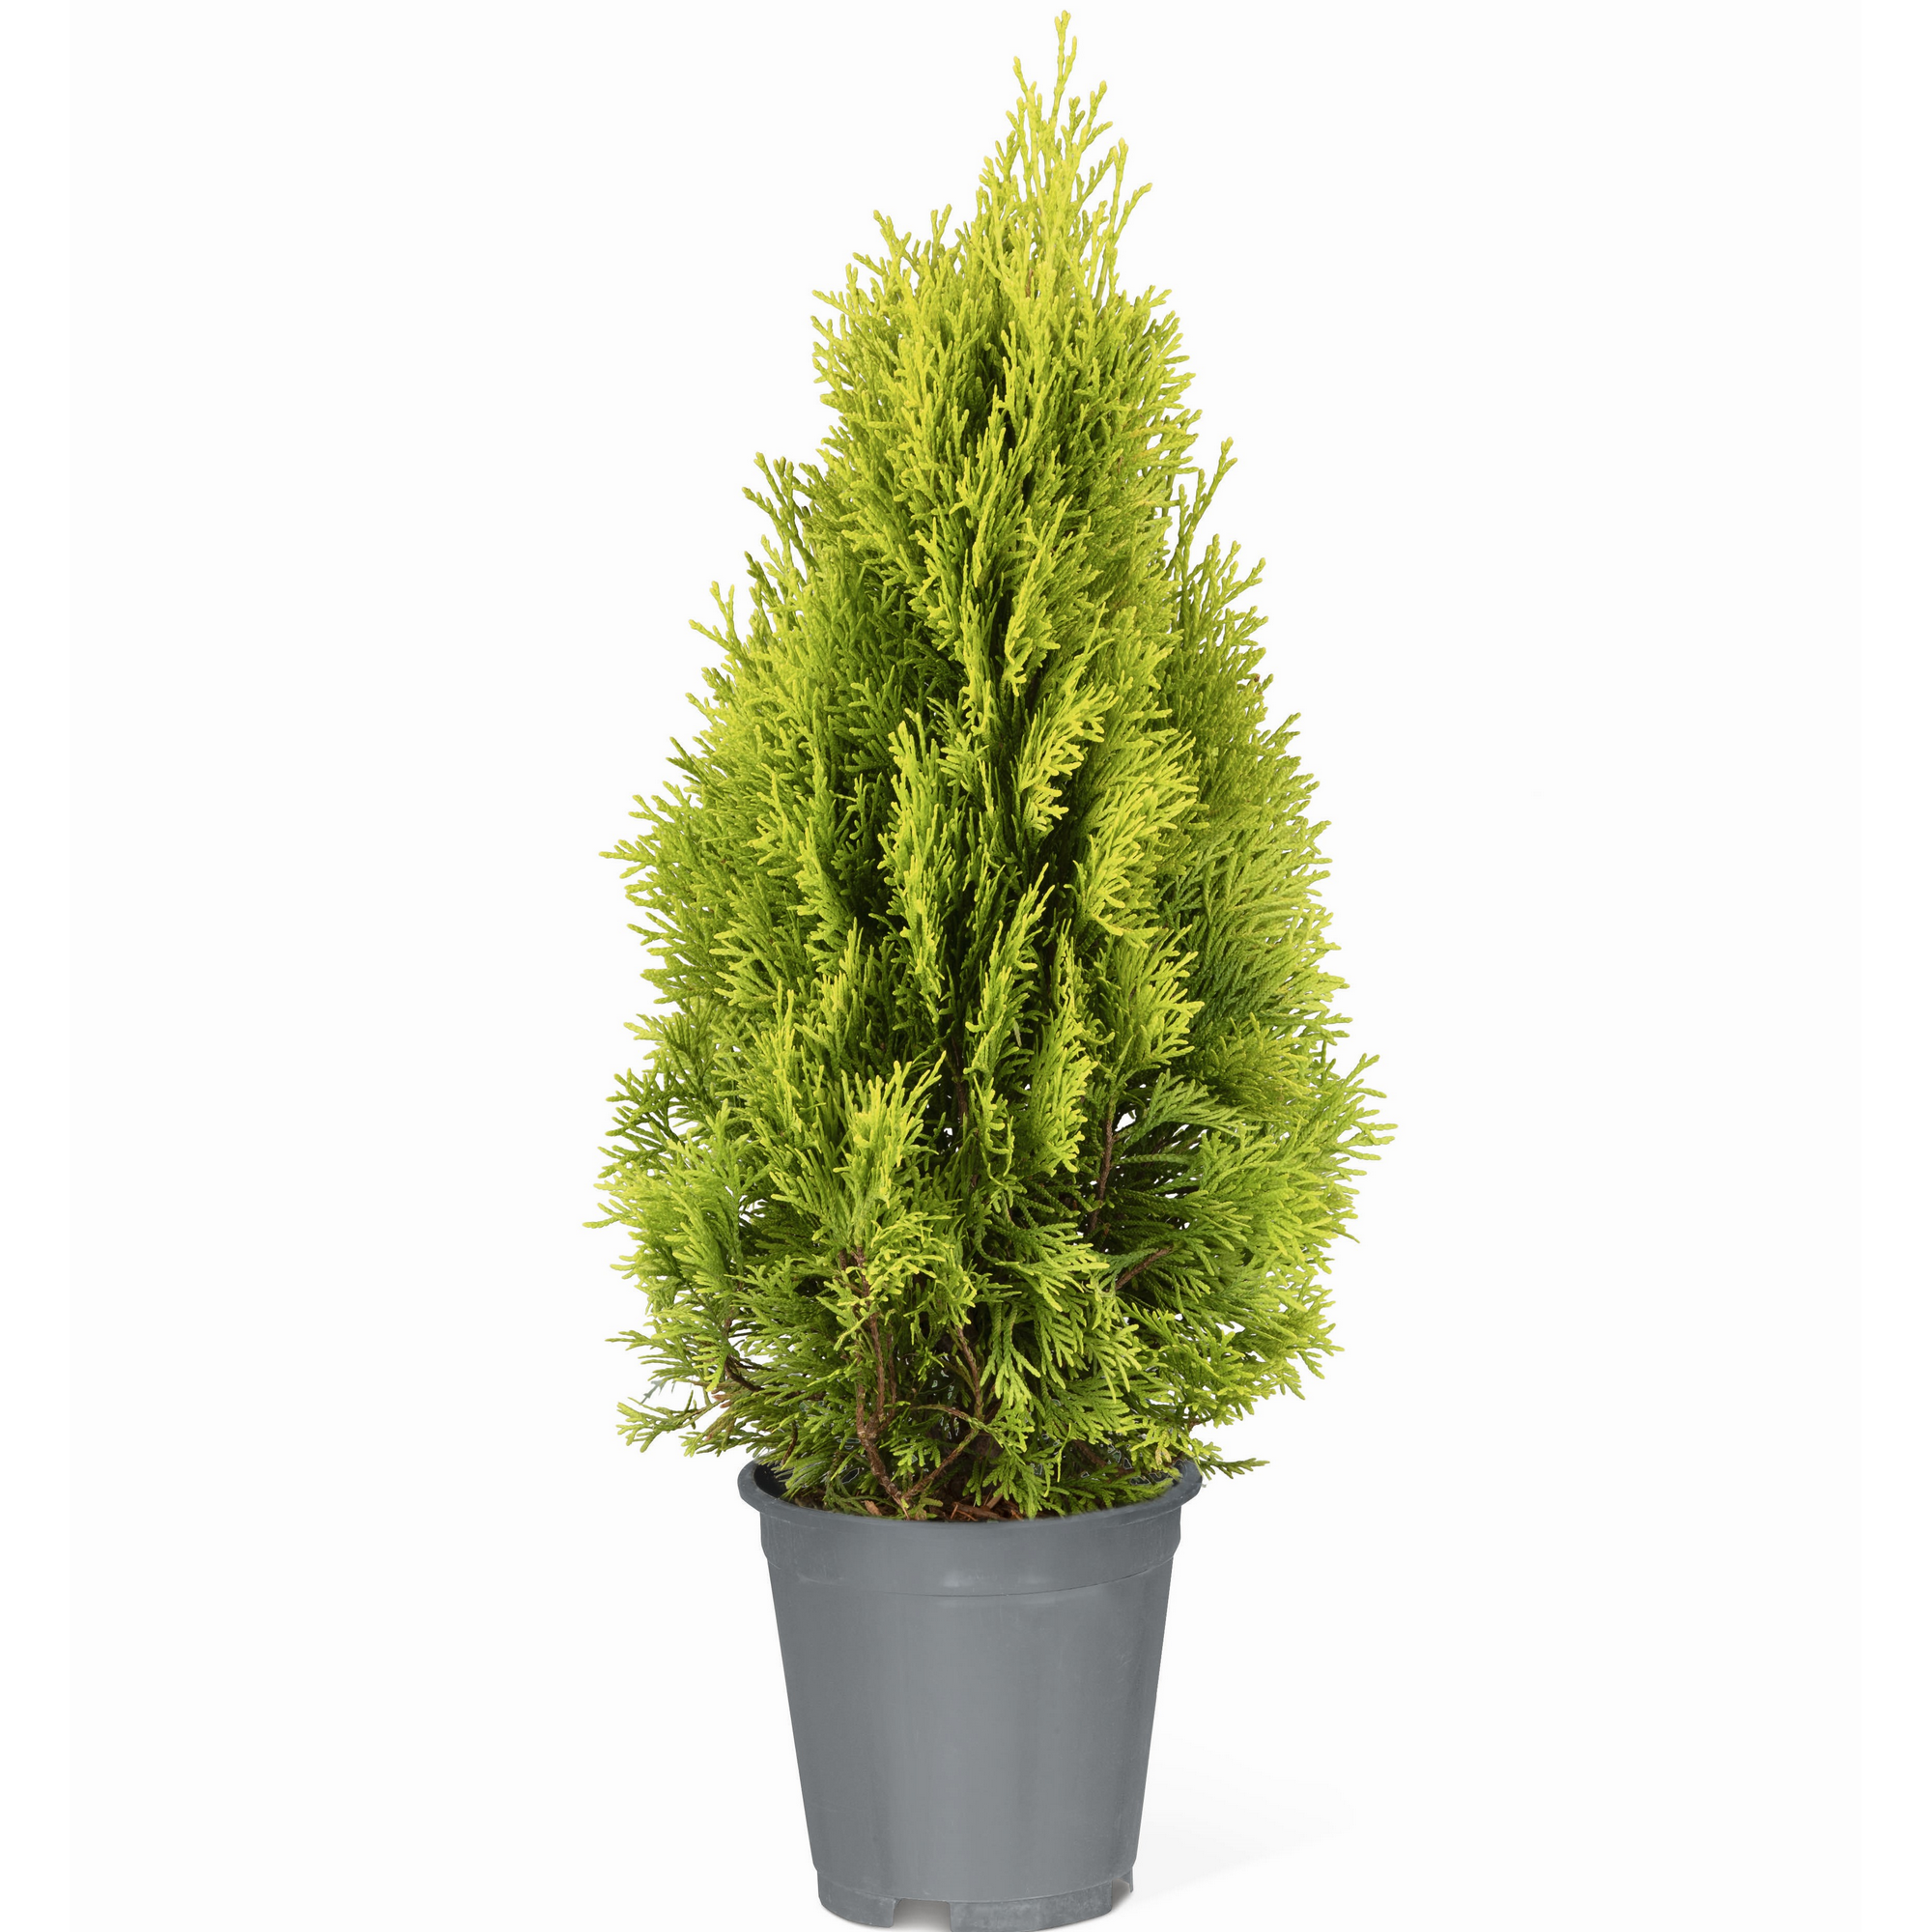 Lebensbaum 'Golden Smaragd®' 60-70 cm 19 cm Topf + product picture